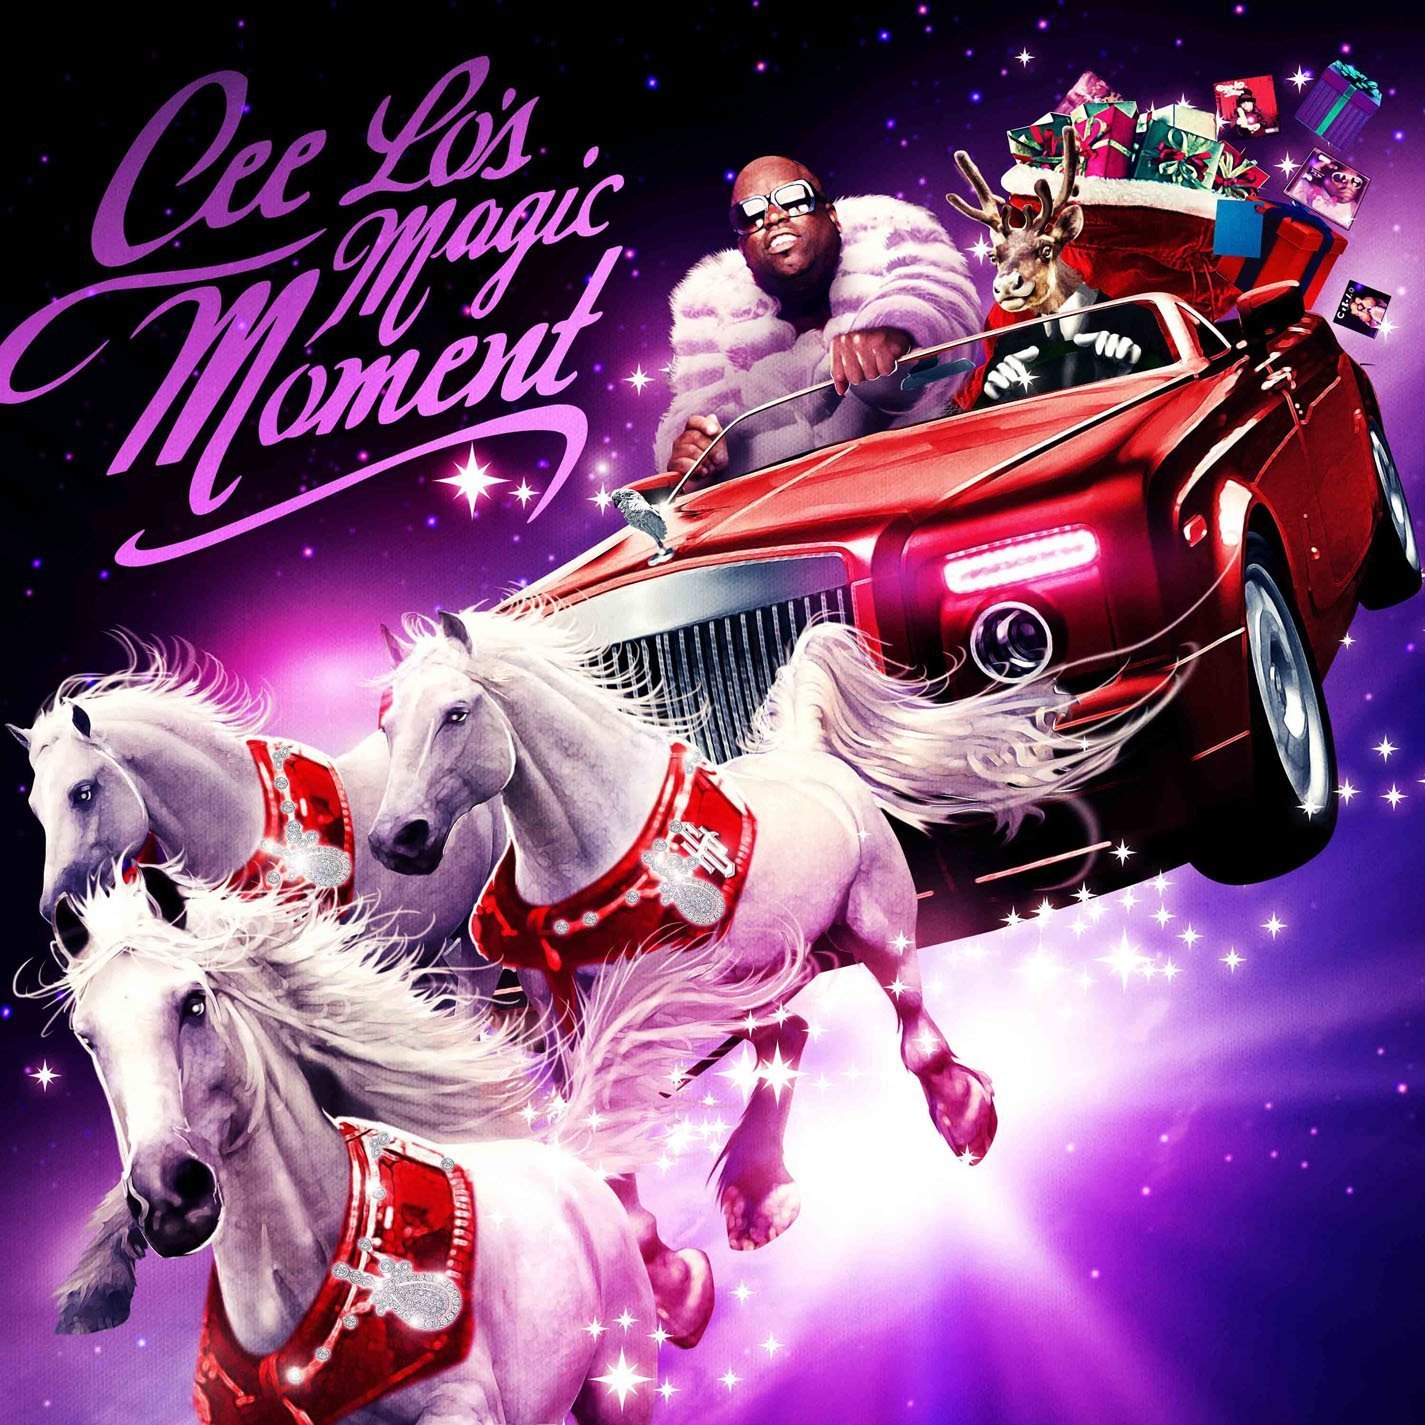  Cee Lo Green:&nbsp;CeeLo's Magic Moment (Vocals) 